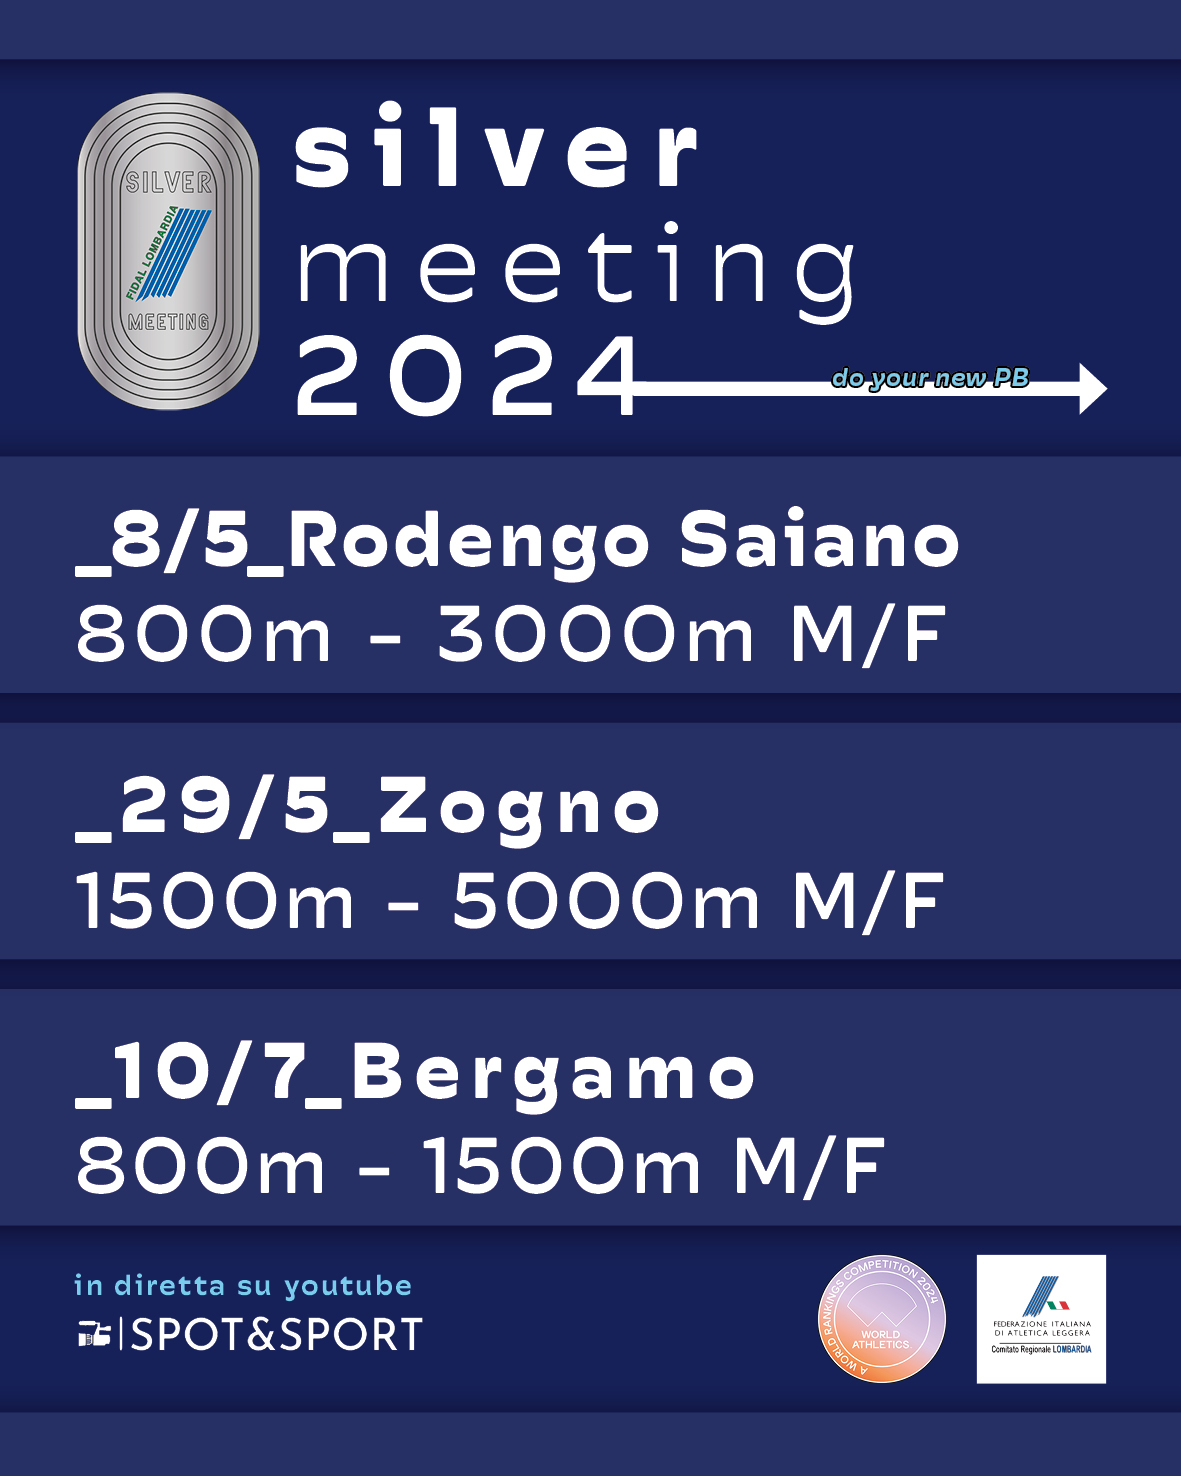 Volantino generale SILVER meetings 2024